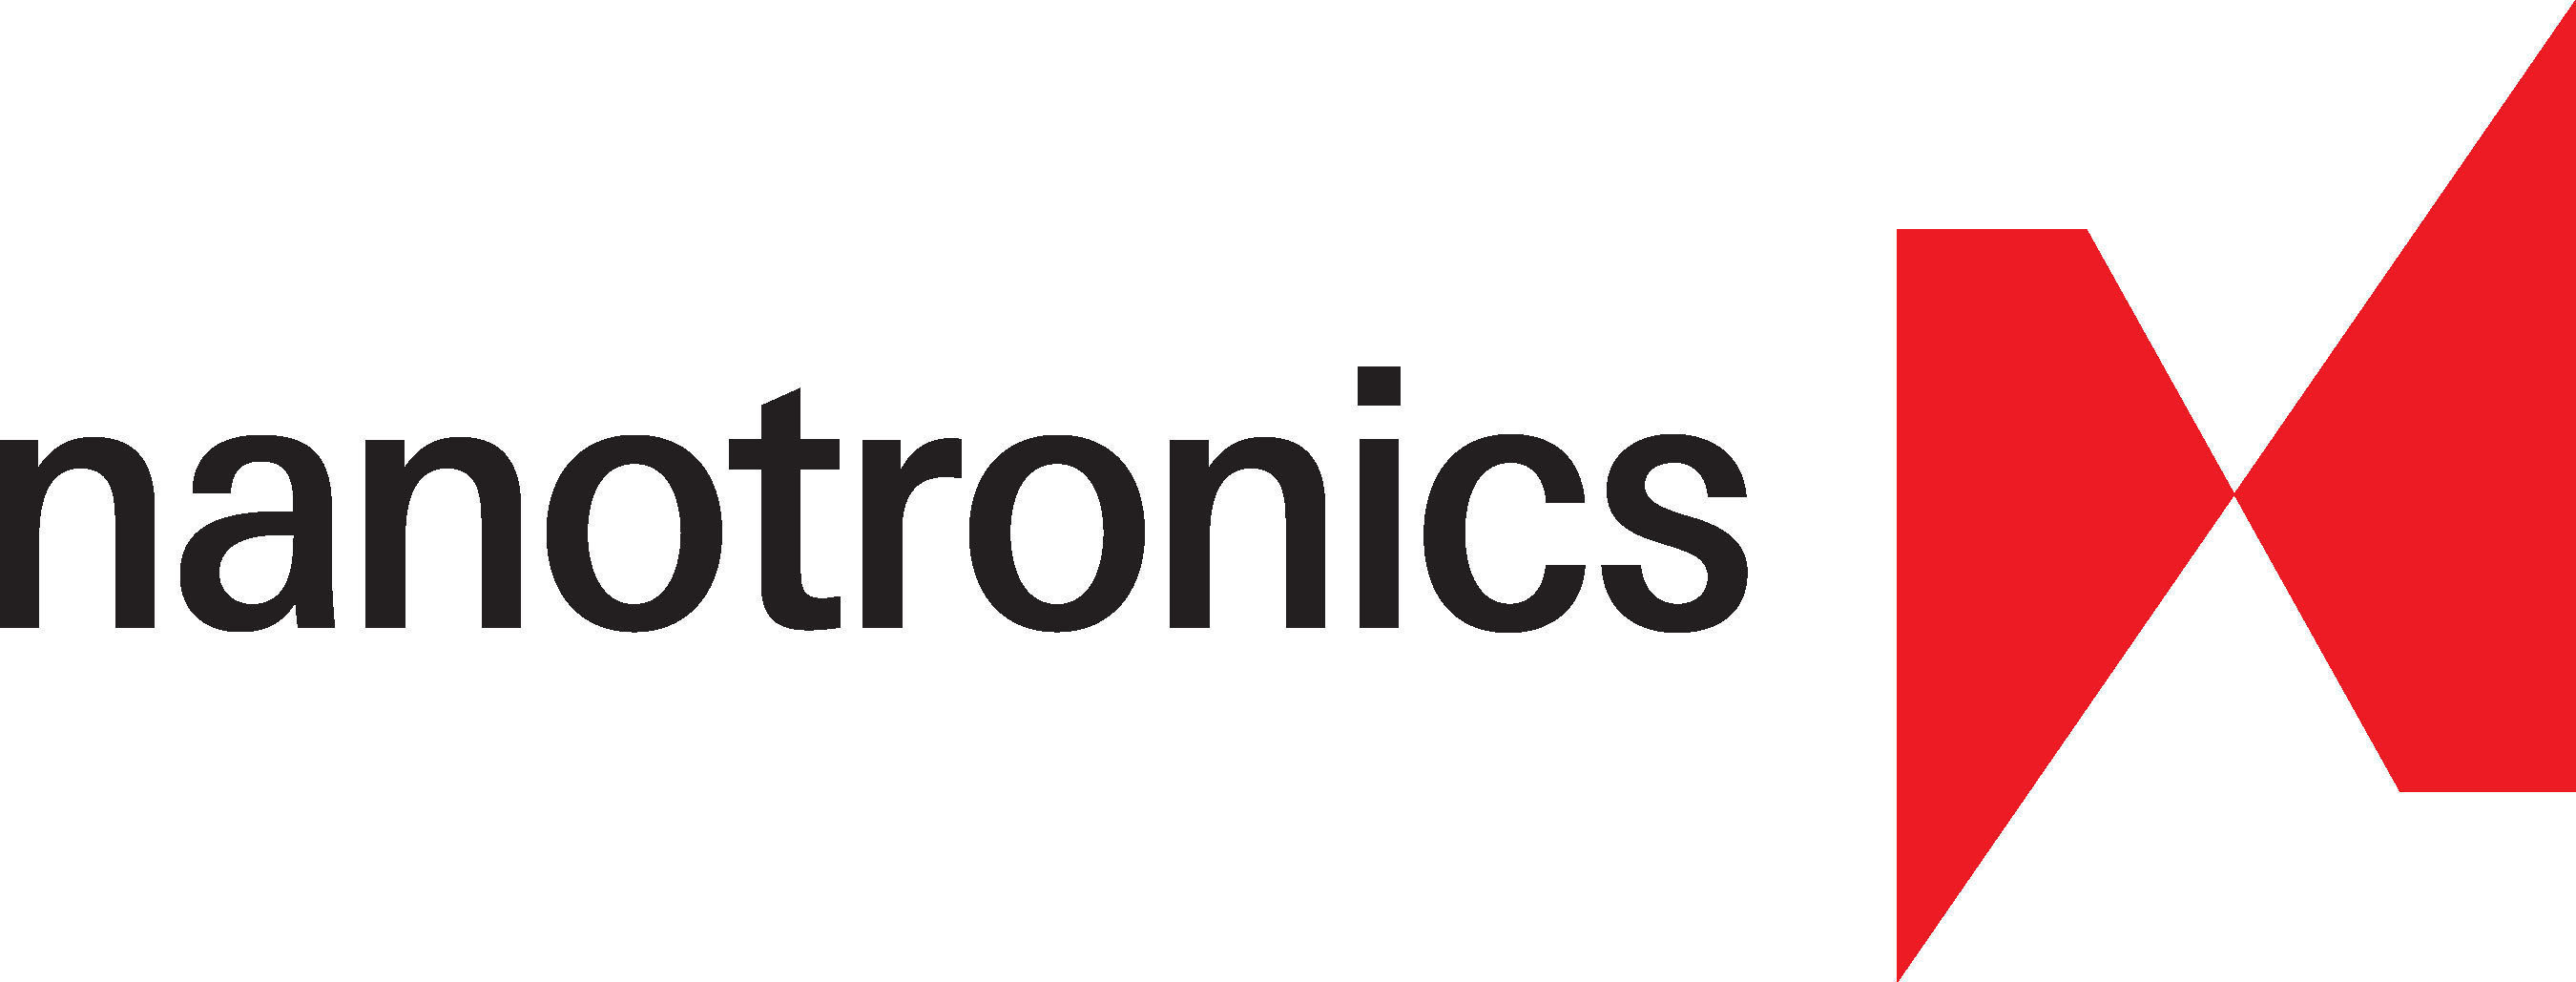 Nanotronics Logo designed by Chermayeff & Geismar & Haviv